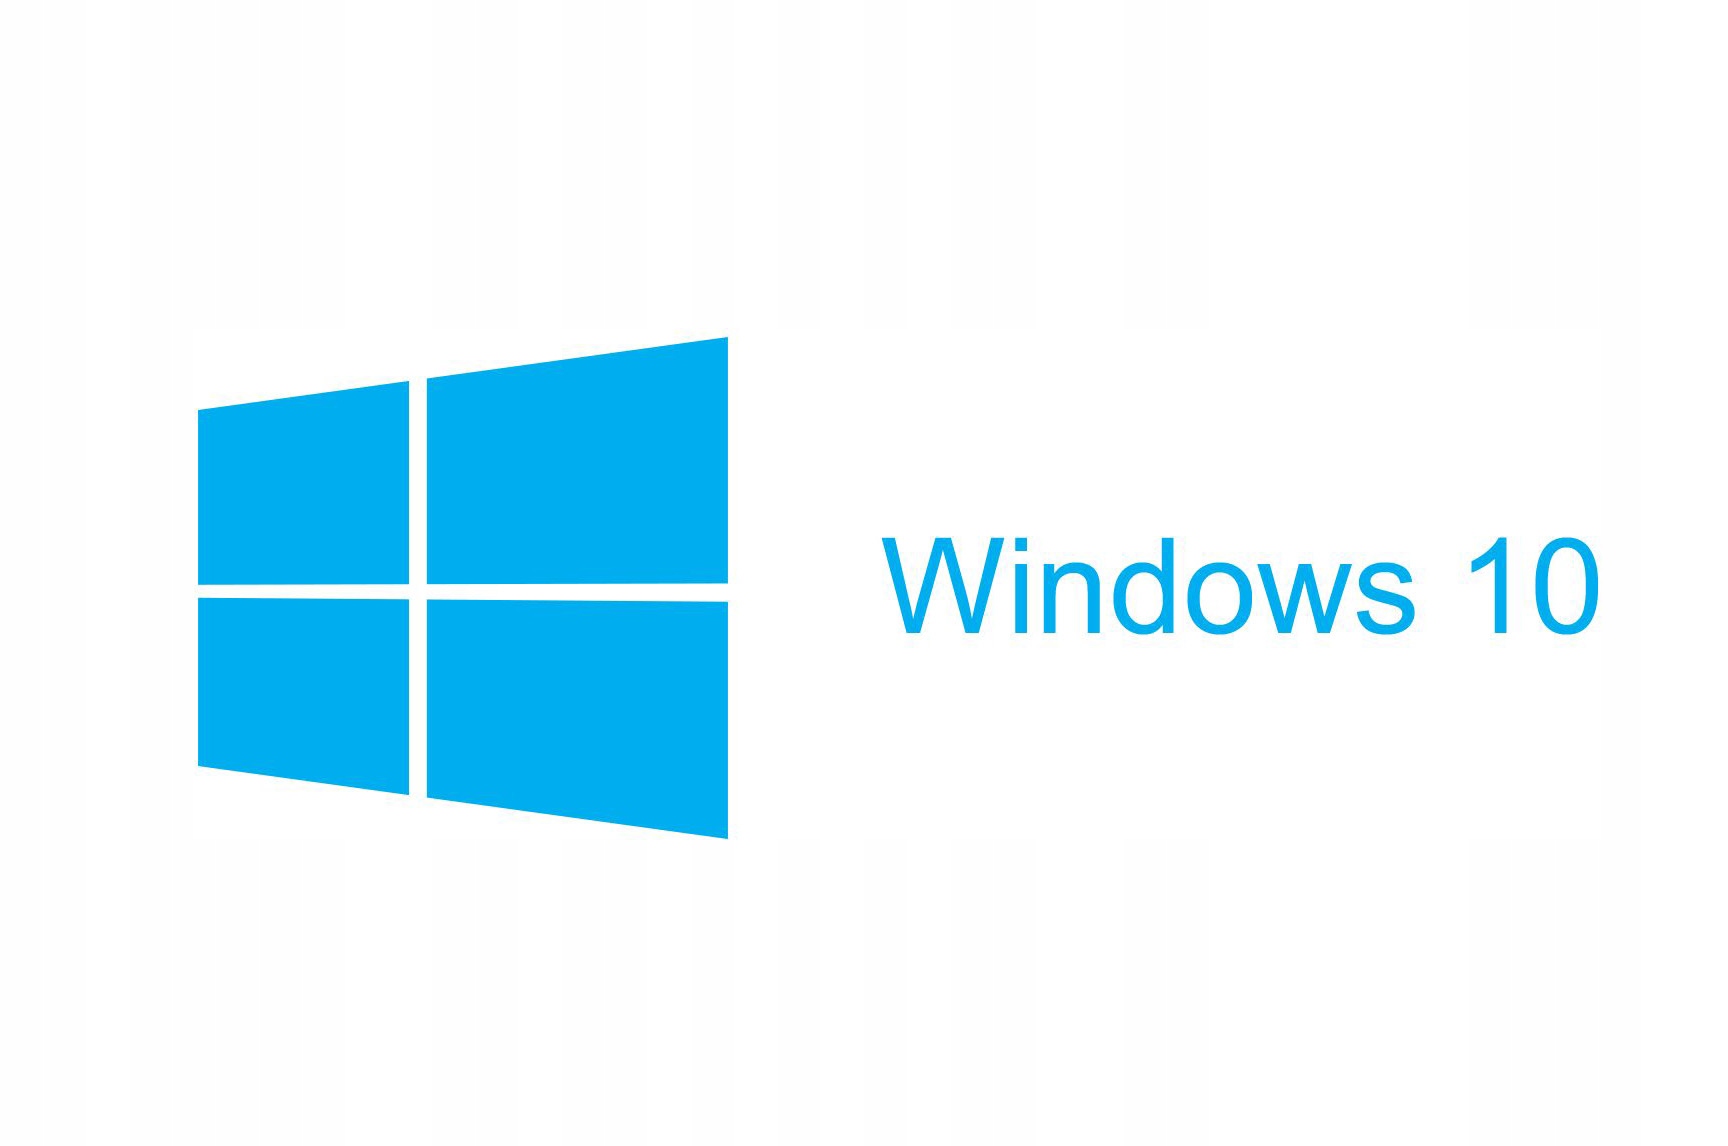 Demo windows. ОС Microsoft Windows 10. Значок виндовс 10. Логотип Windows. Логотип Windows 1.0.